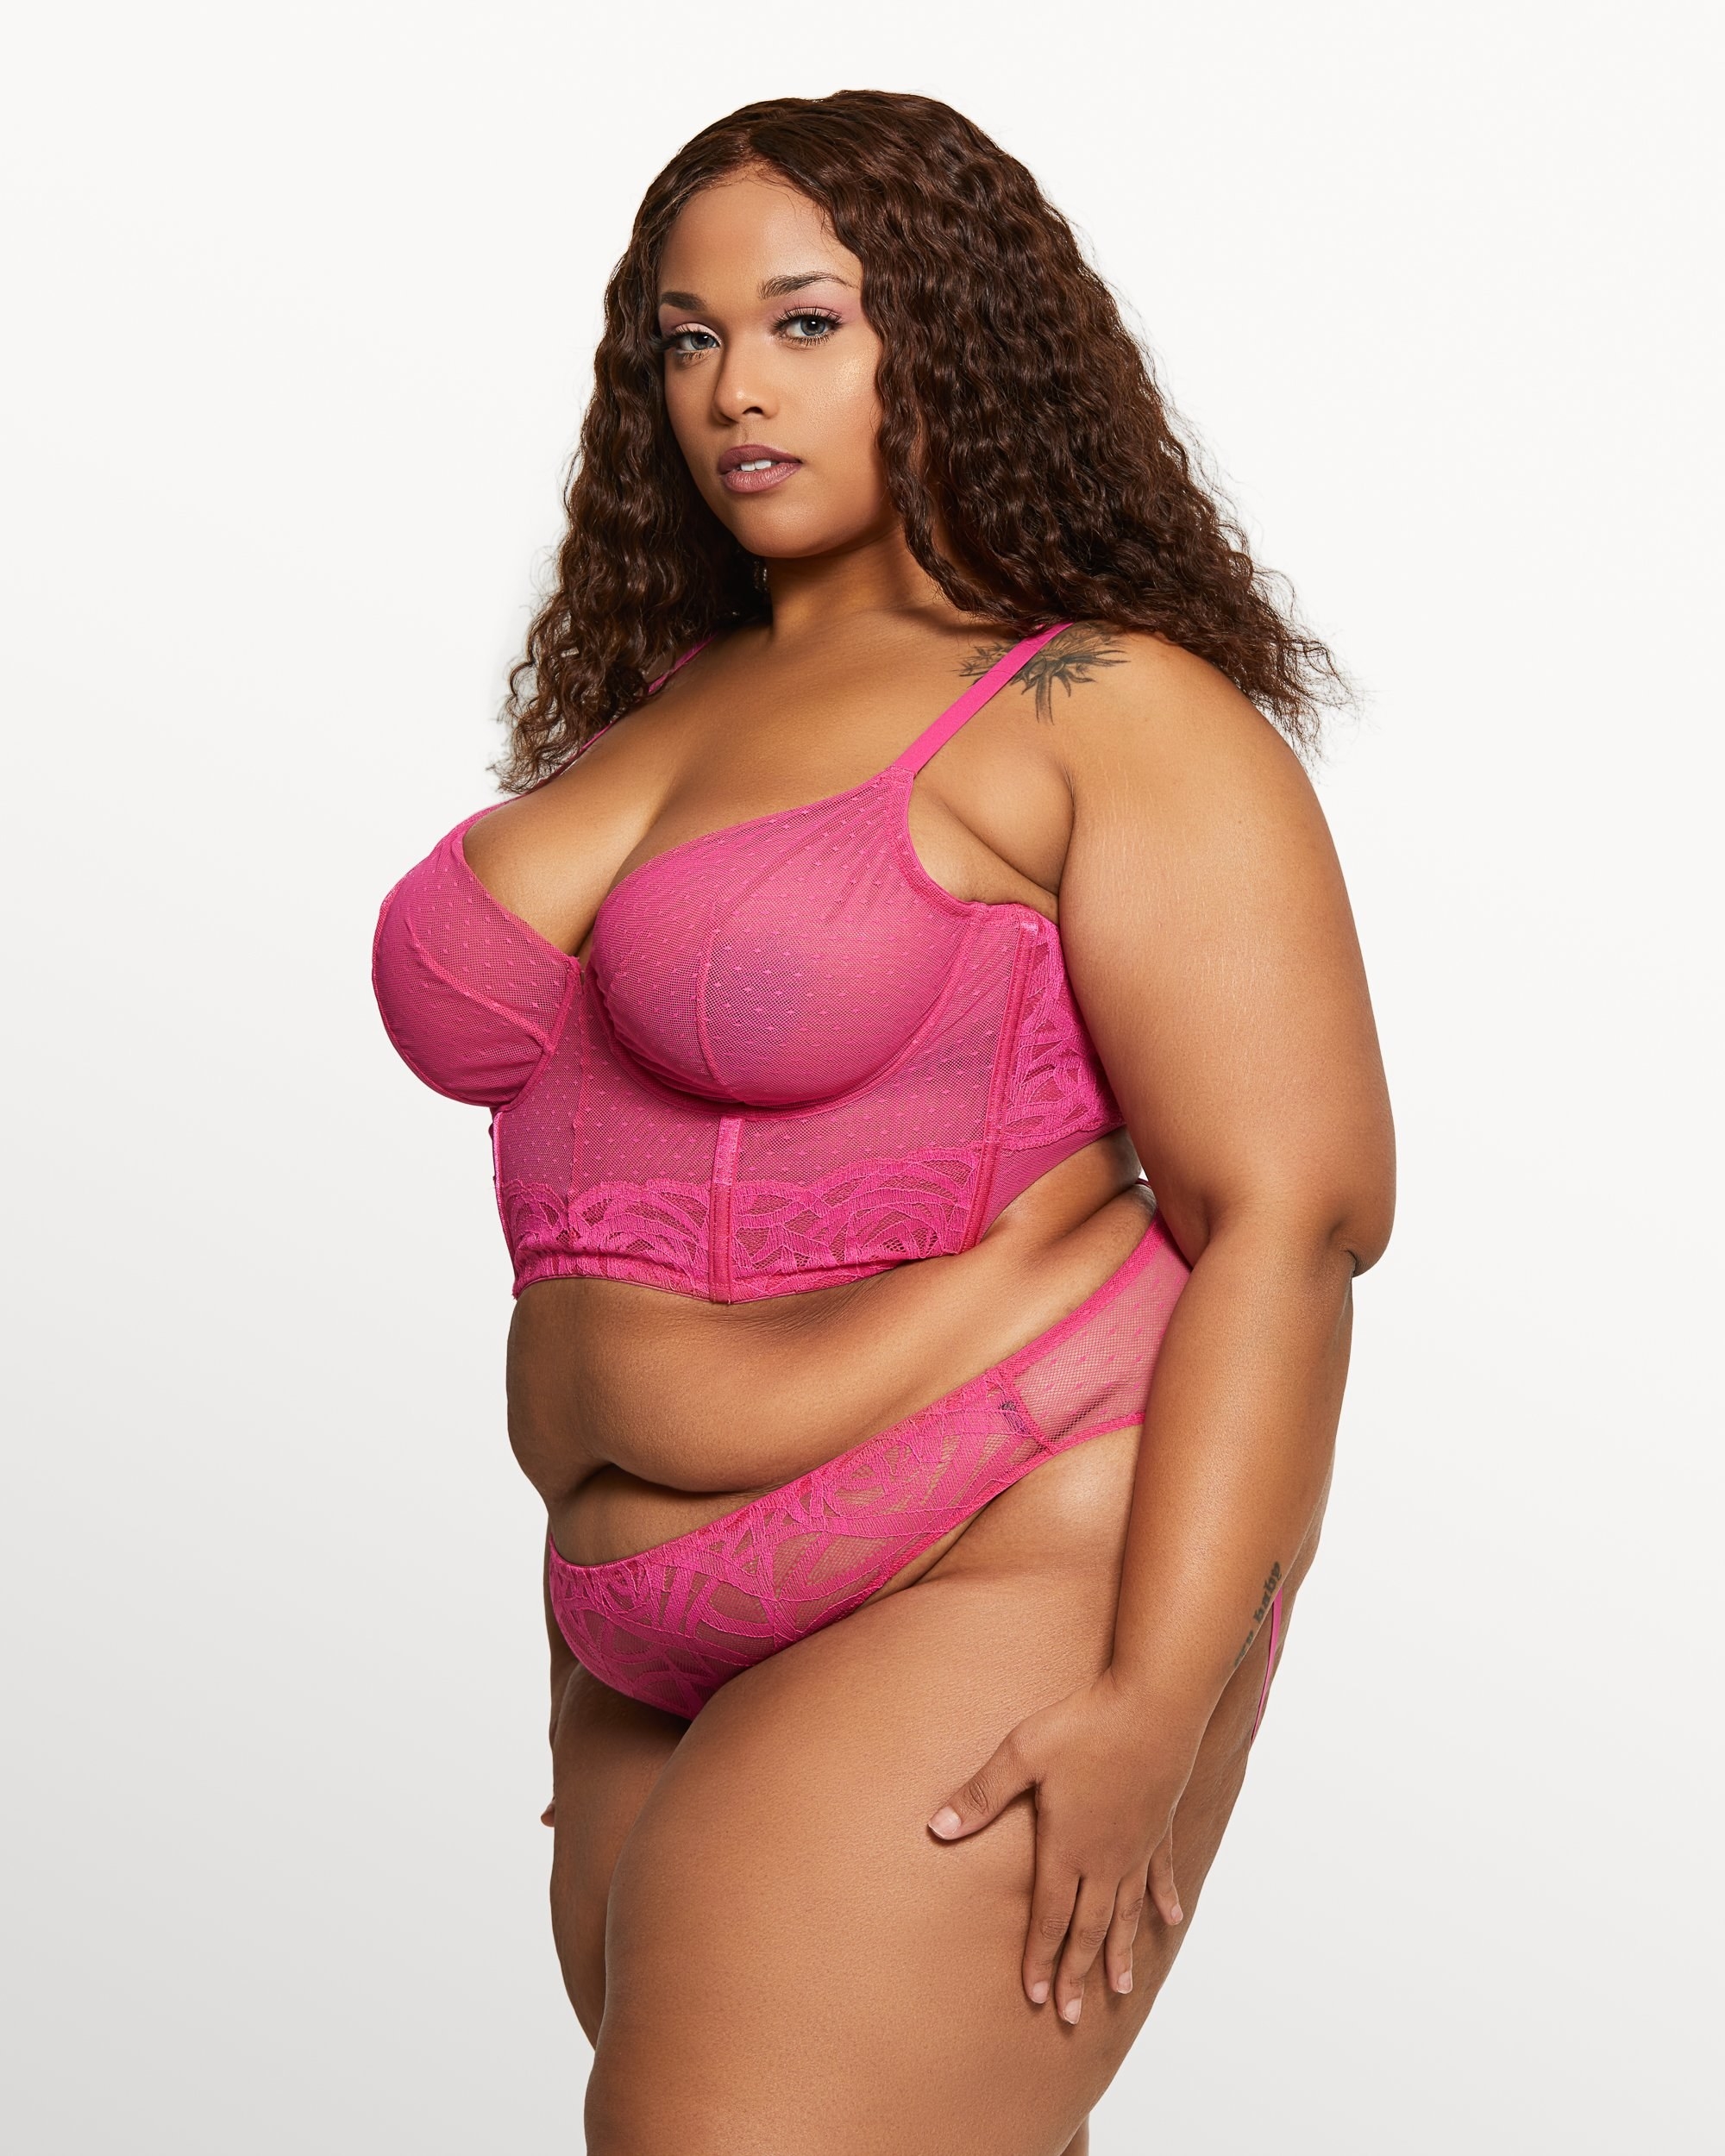 model in sheer pink bustier bra